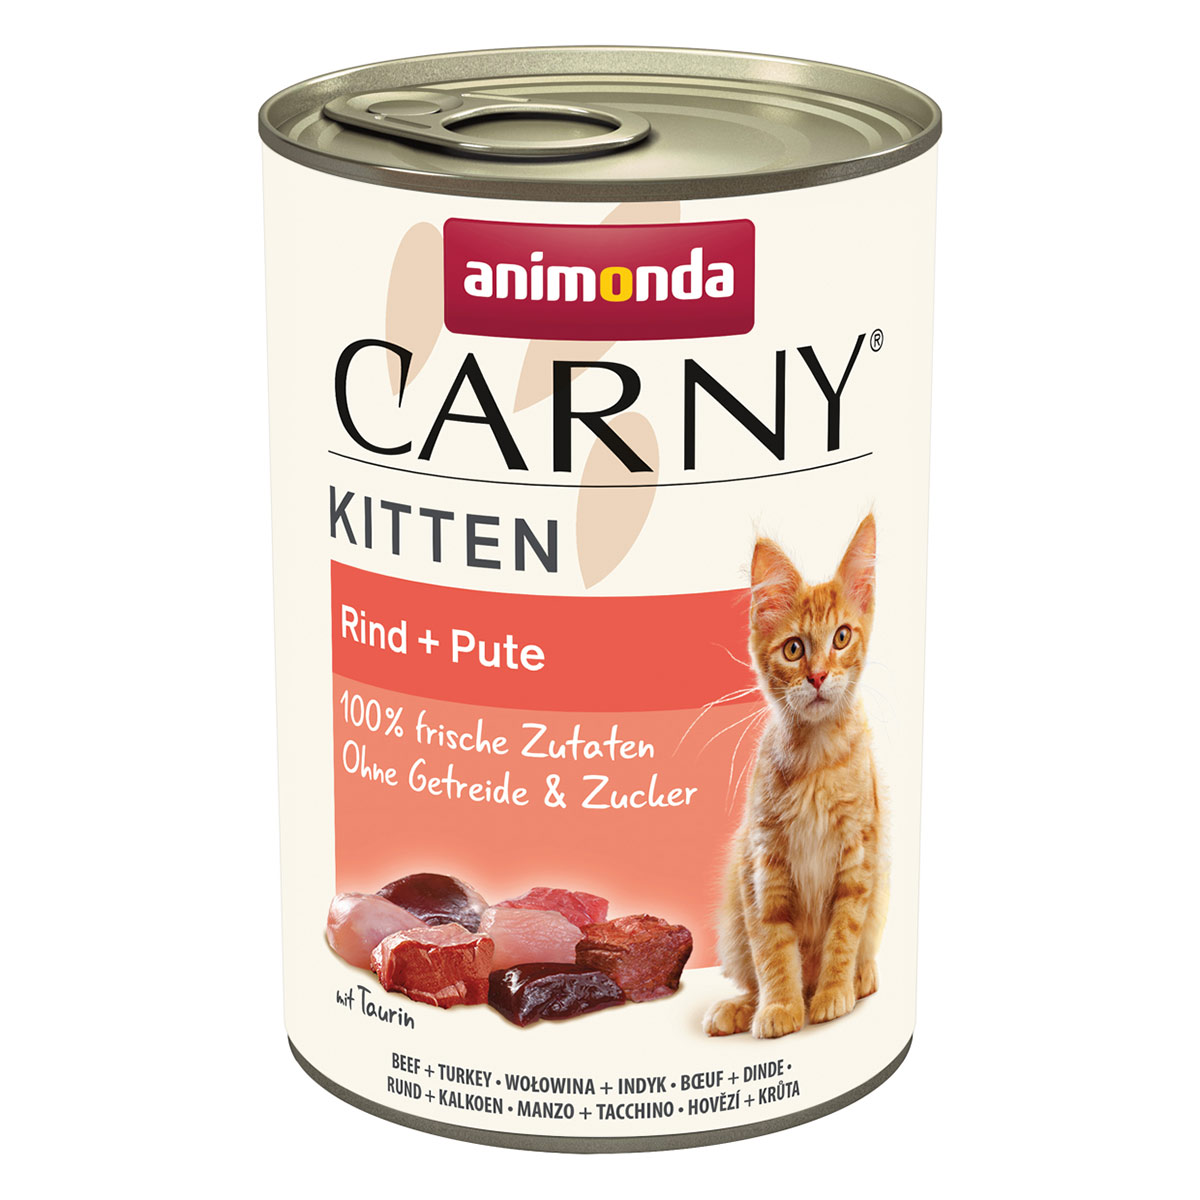 animonda Carny Kitten Rind + Pute 24x400g von animonda Carny